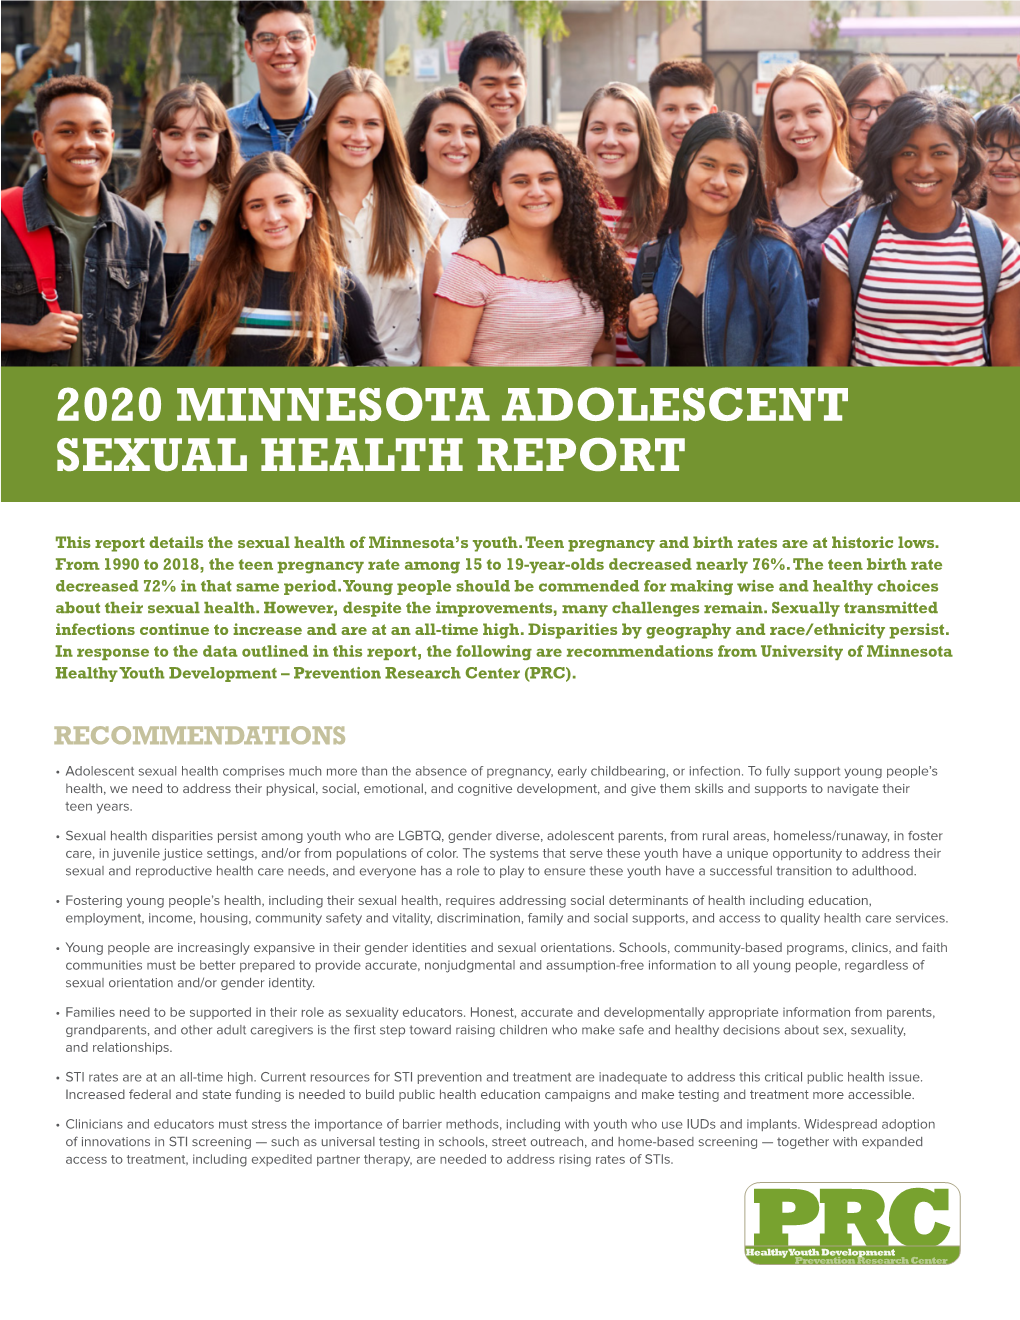 2020 Minnesota Adolescent Sexual Health Report